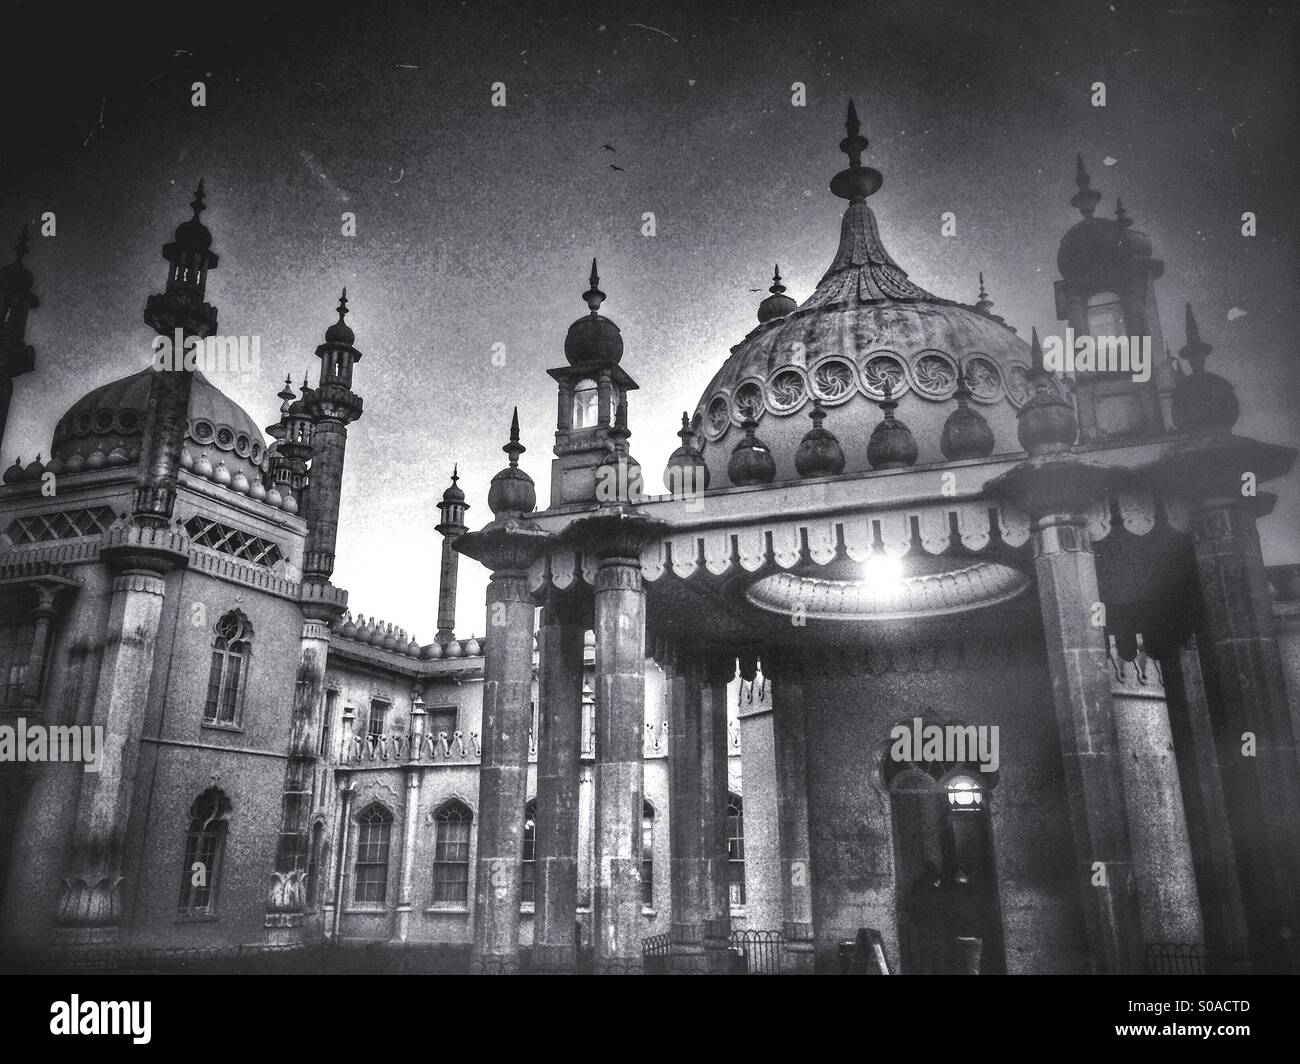 Vintage style black and white photo of the Royal Pavilion in Brighton, England. Stock Photo